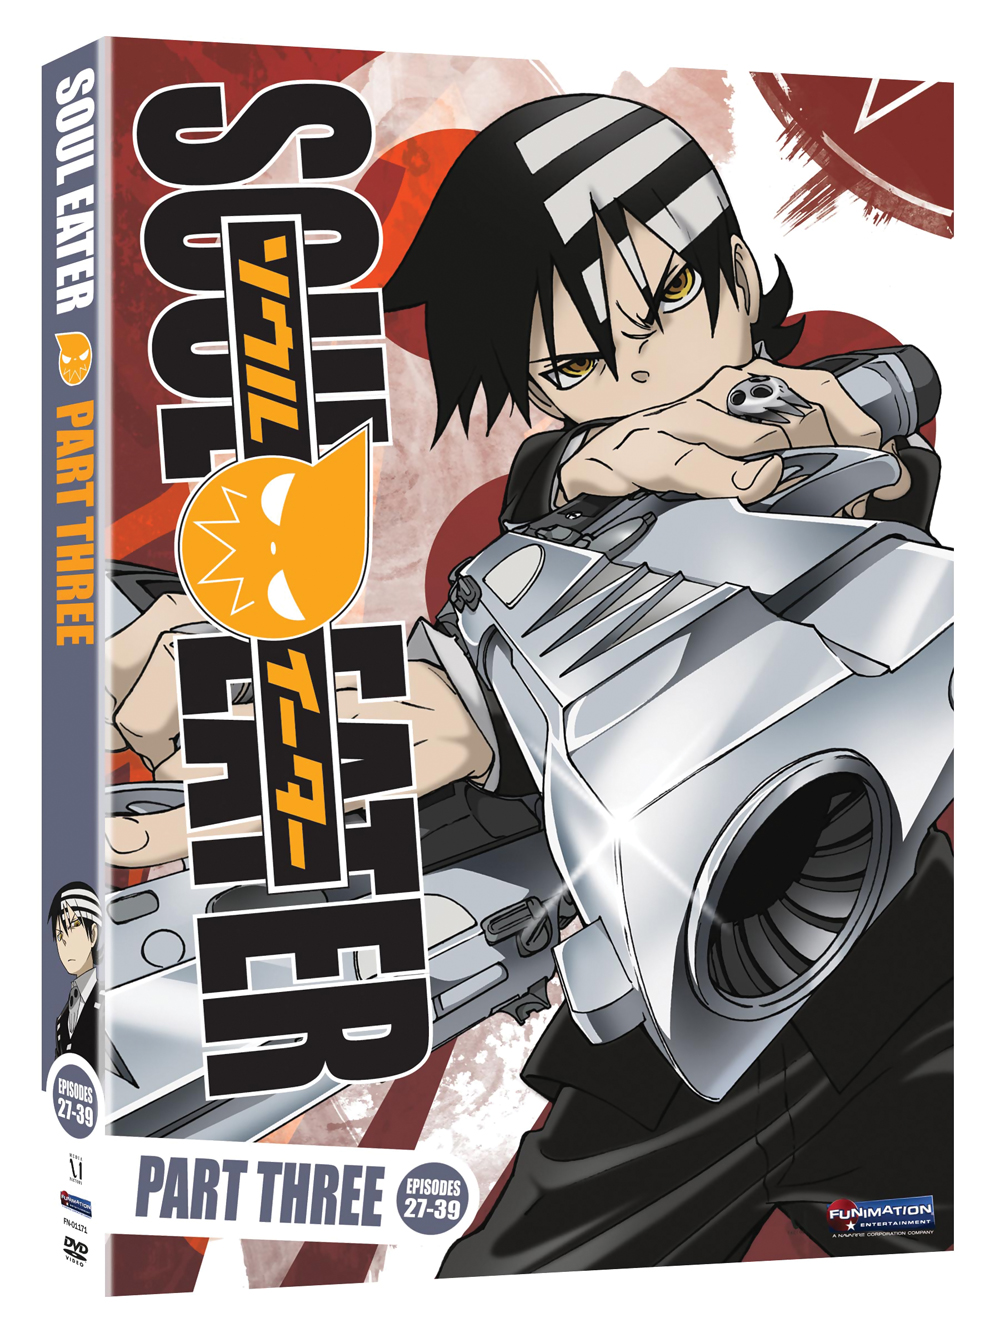 Soul Eater: Part 1 (DVD, 2010, 2-Disc Set) Episodes 1-13 Anime Box Set  704400011702